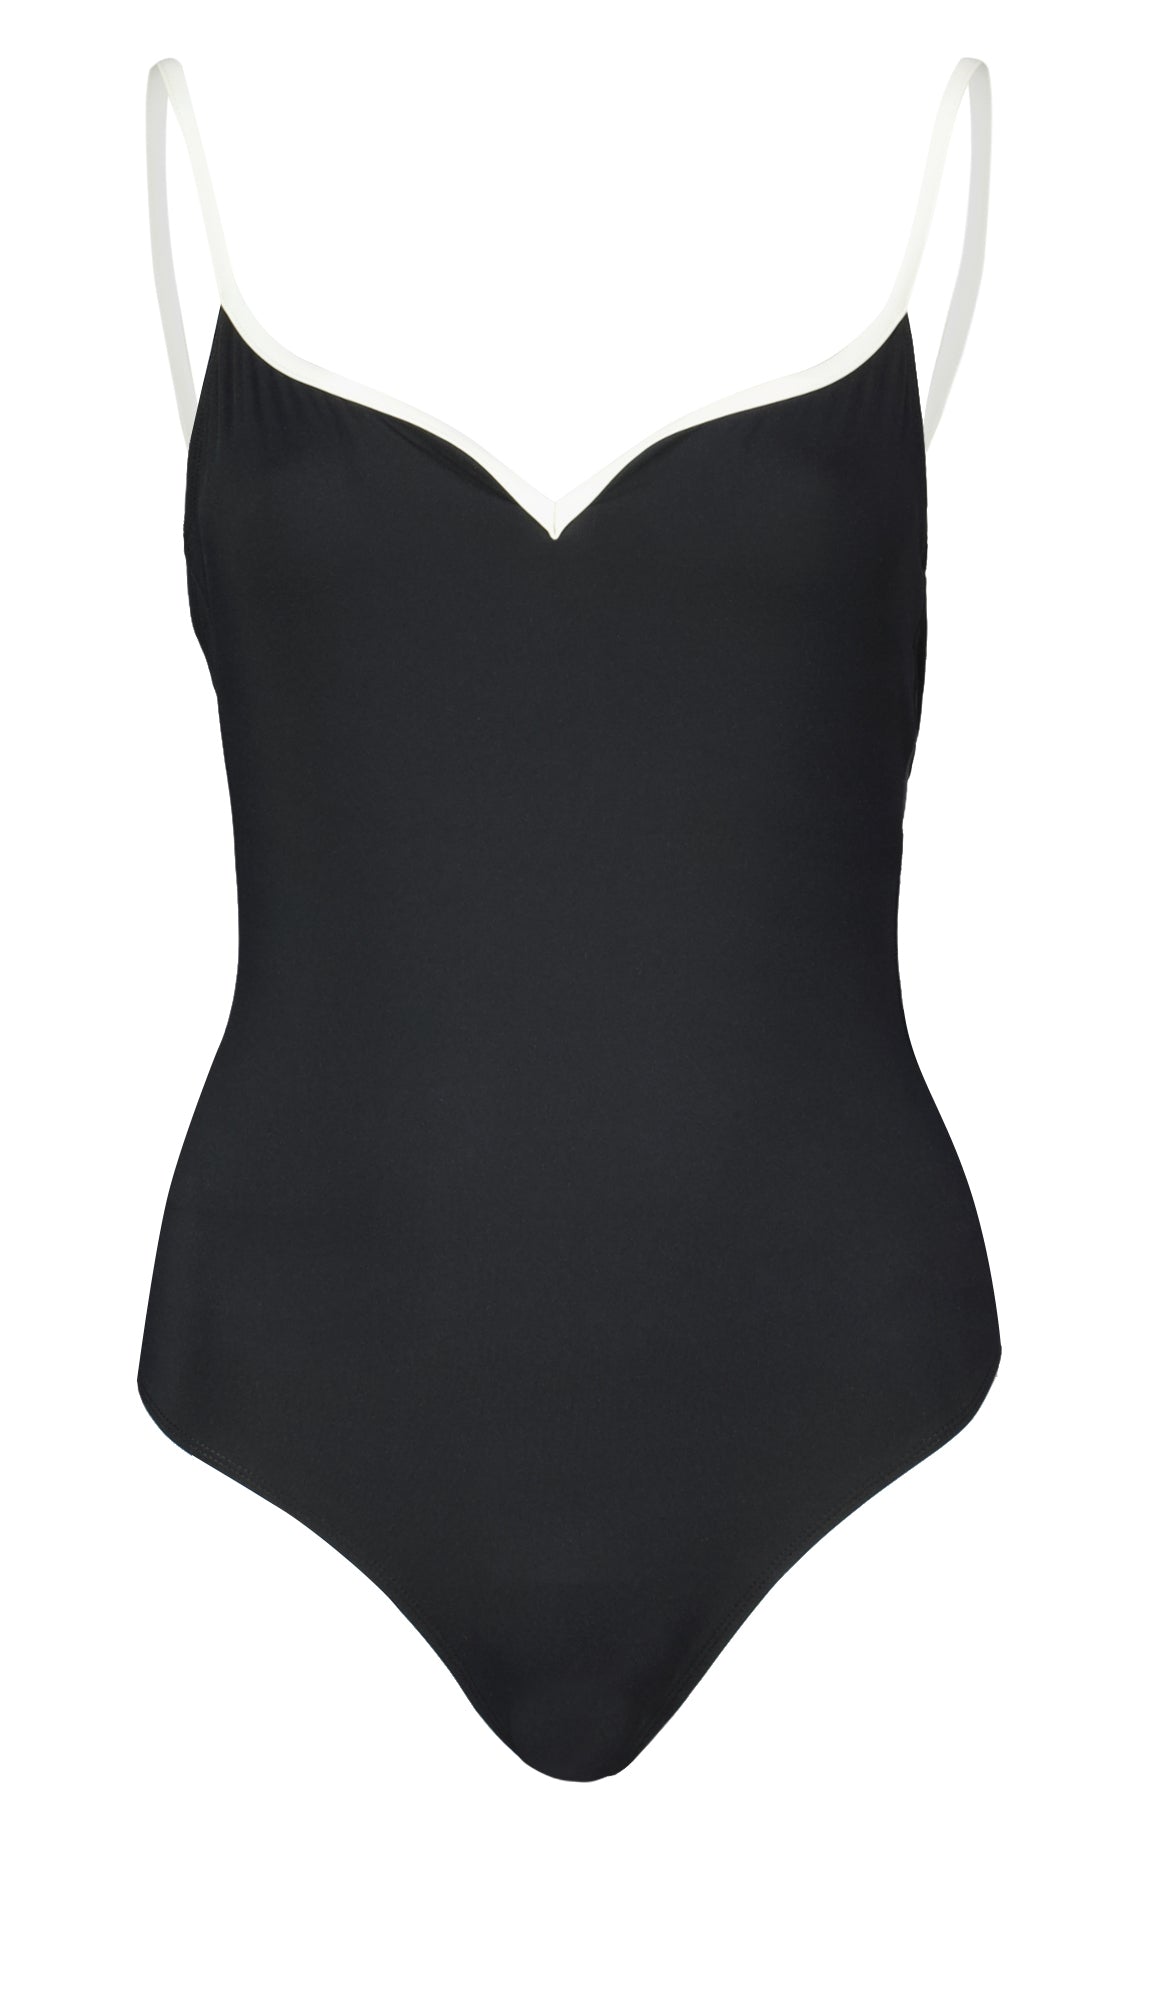 SOPHIA BLACK AND WHITE - Blue Lagoon Swimwear